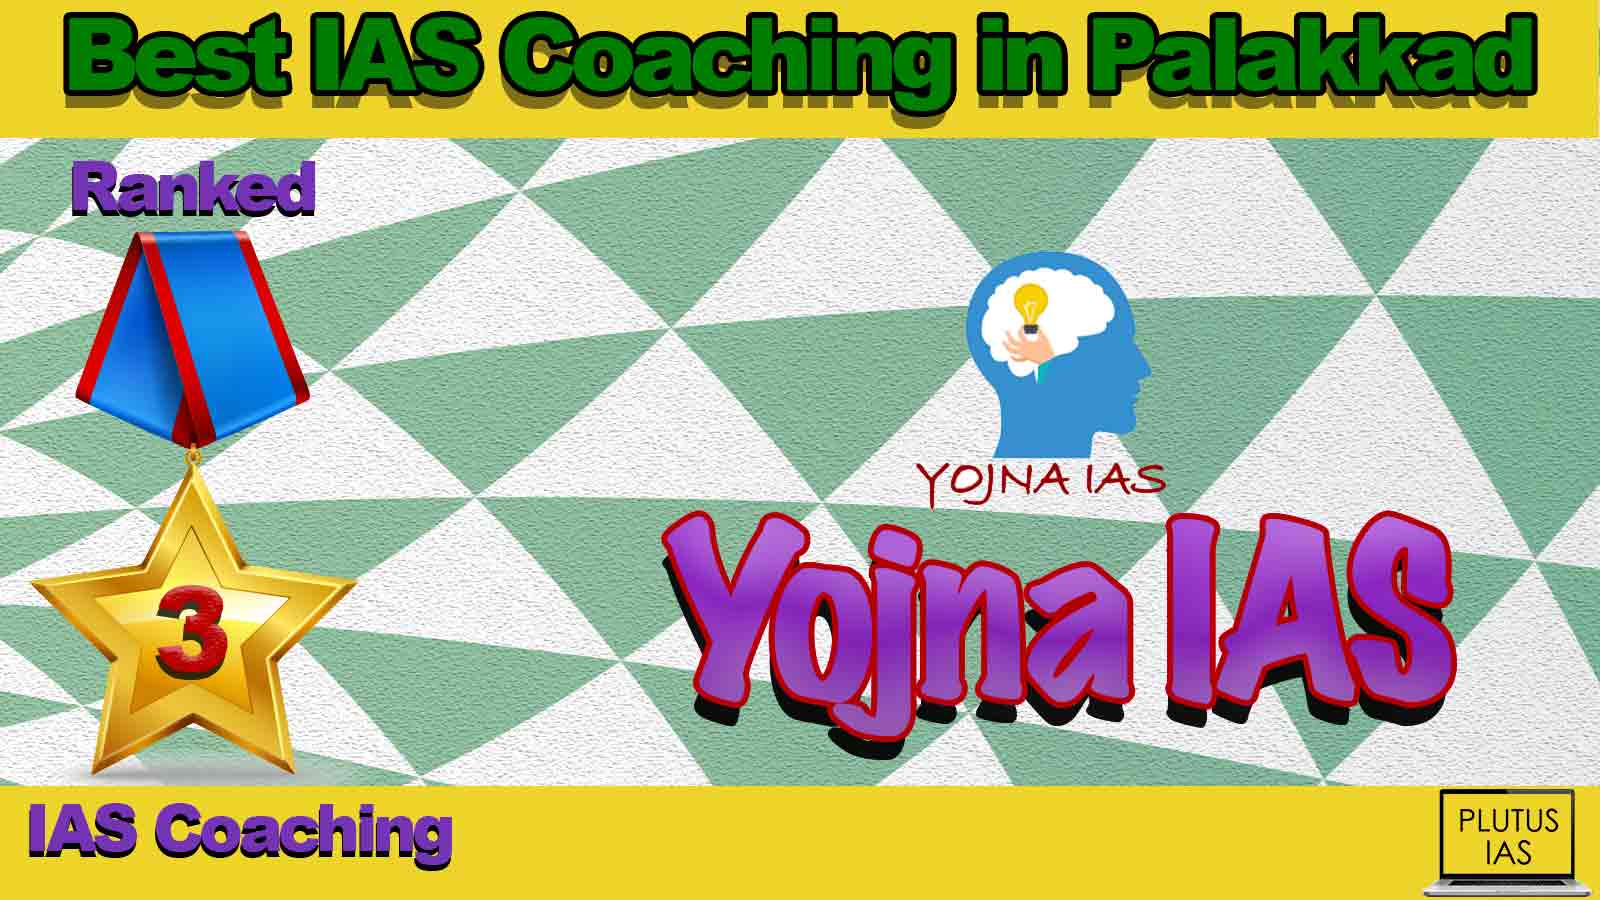 Best IAS Coaching in Palakkad